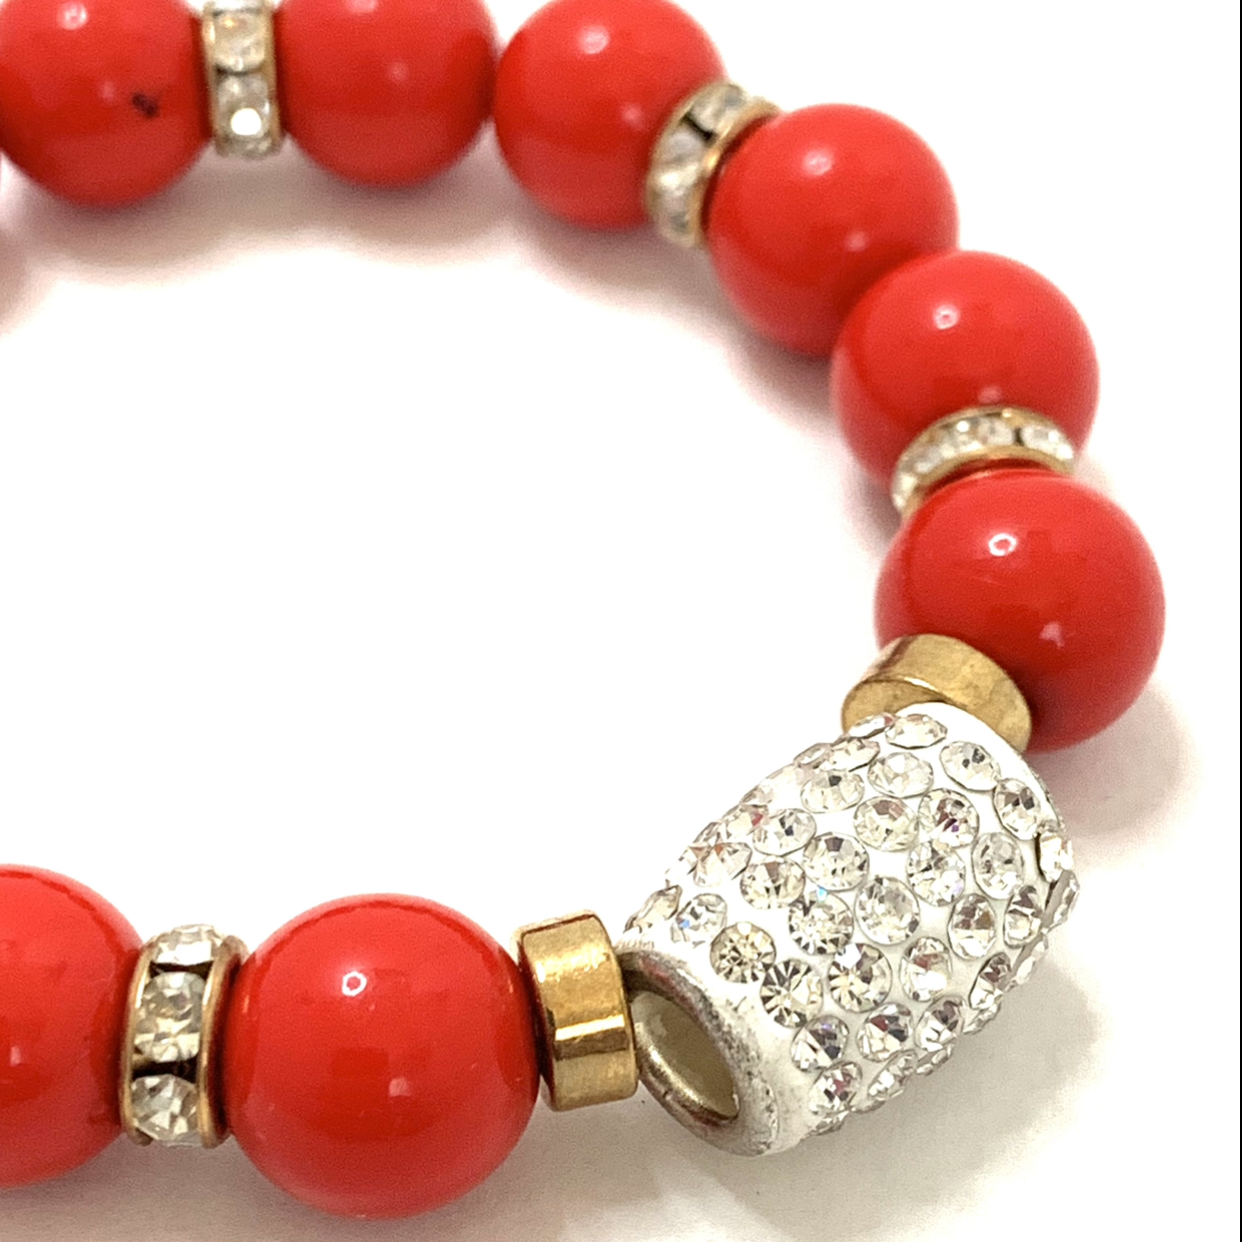 Fashion Style Red Bracelet with Gold/Diamond design